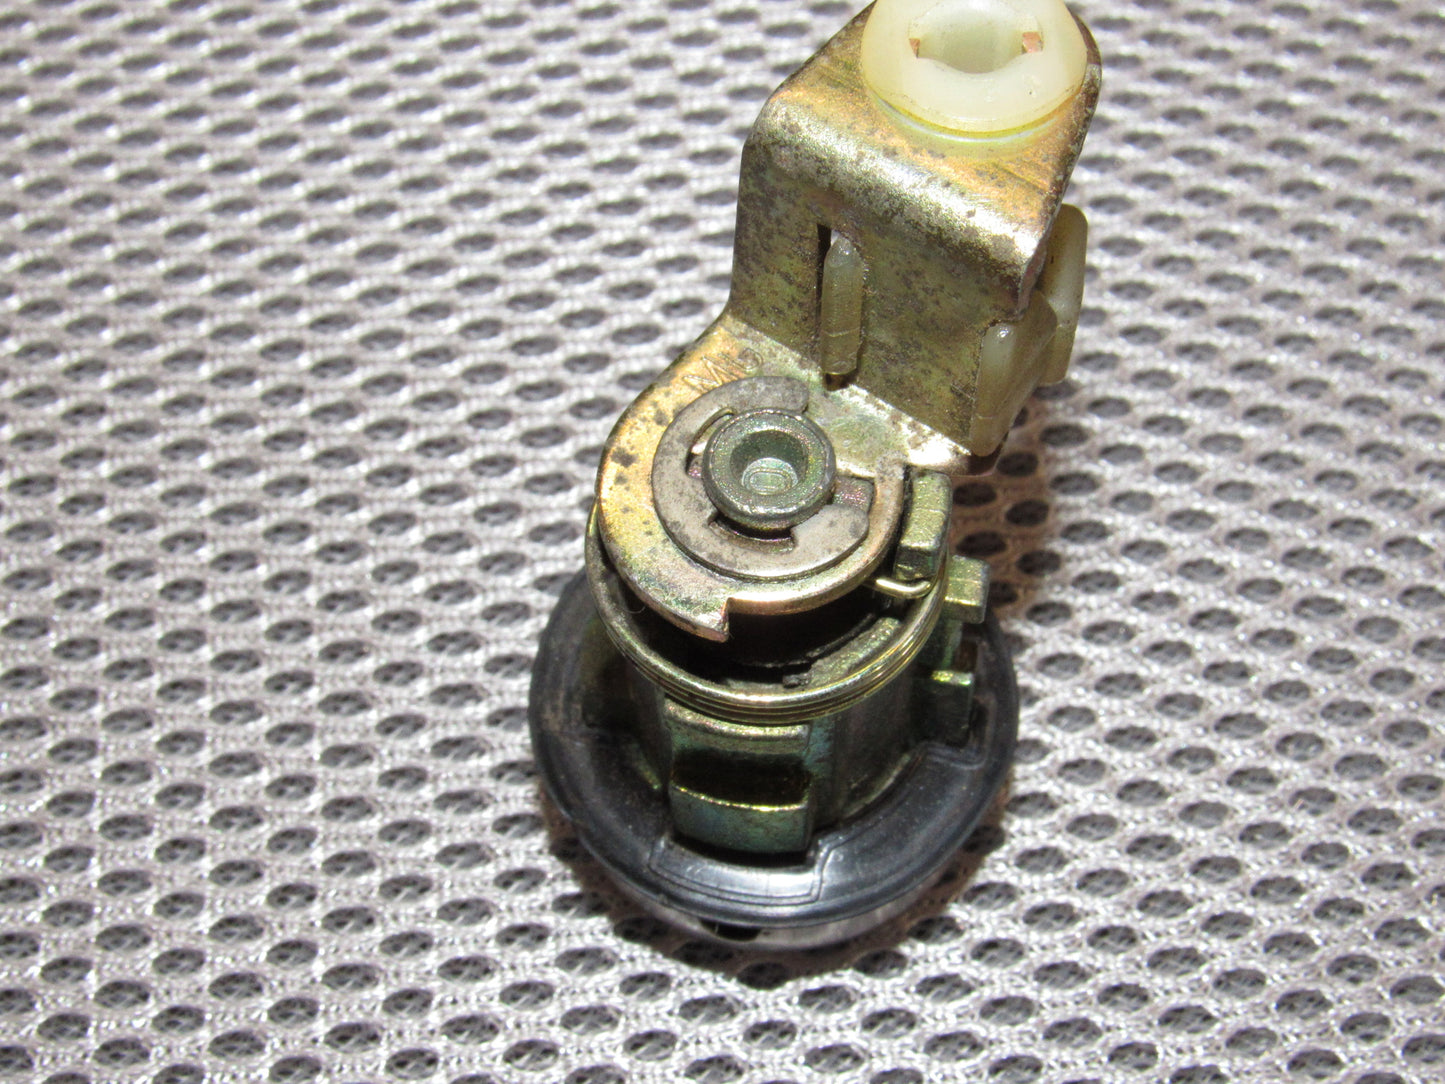 84 85 86 Nissan 300zx OEM Hatch Door Trunk Latch Lock Cylinder Tumbler